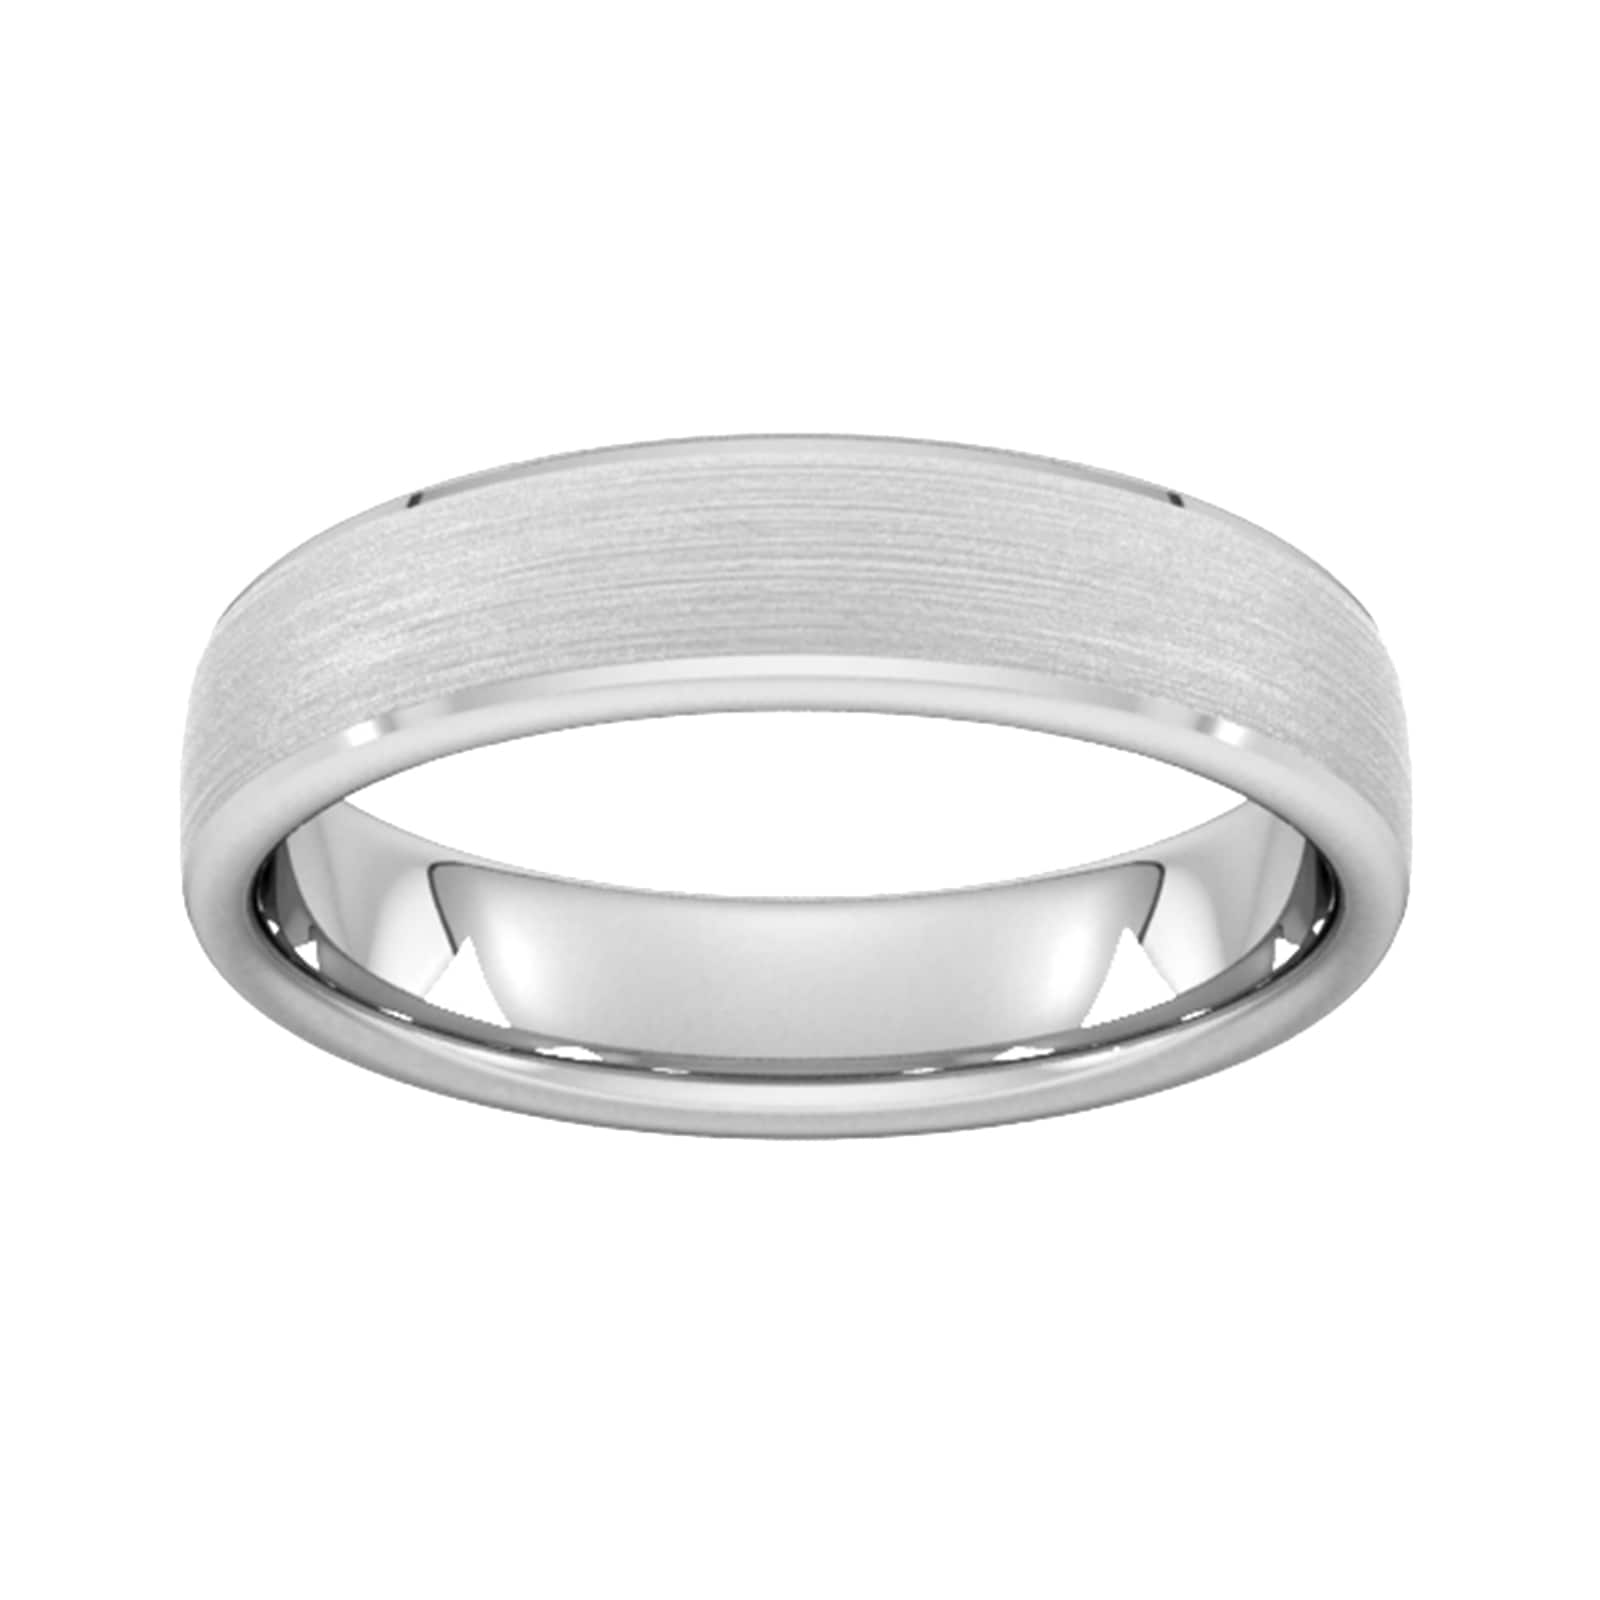 5mm Slight Court Standard Polished Chamfered Edges With Matt Centre Wedding Ring In 950 Palladium - Ring Size K